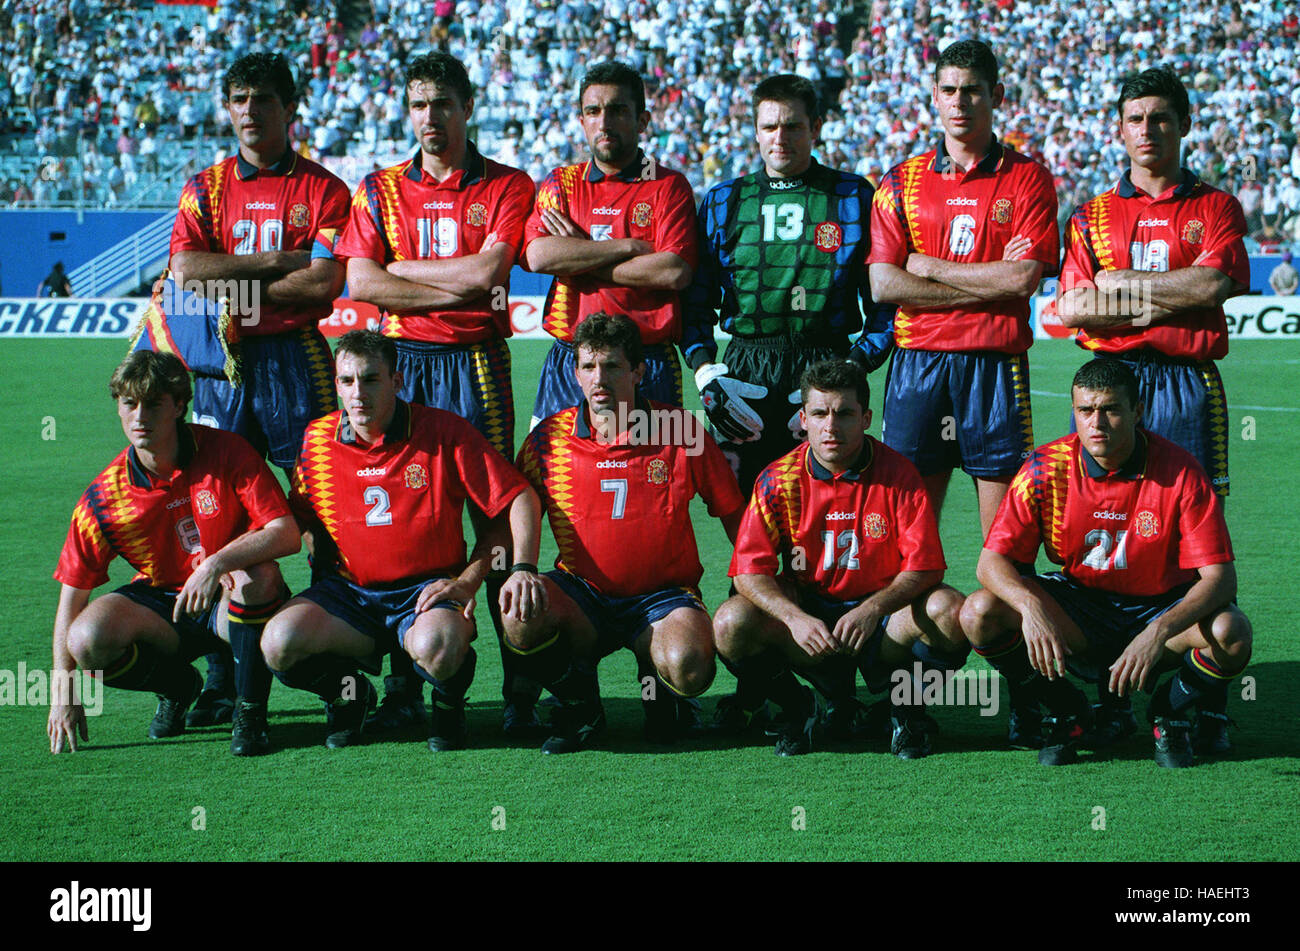 spain-world-cup-1994-05-july-1994-HAEHT3.jpg